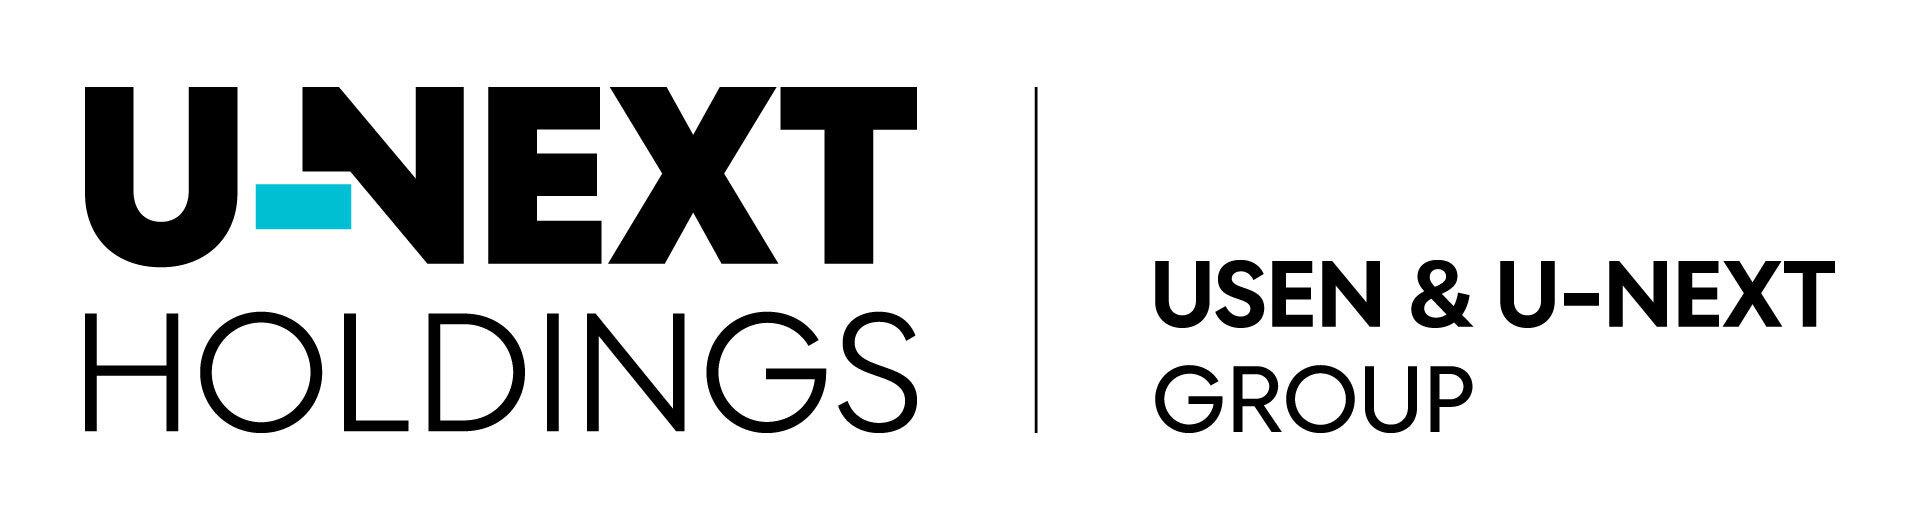 Unext Holdings logo